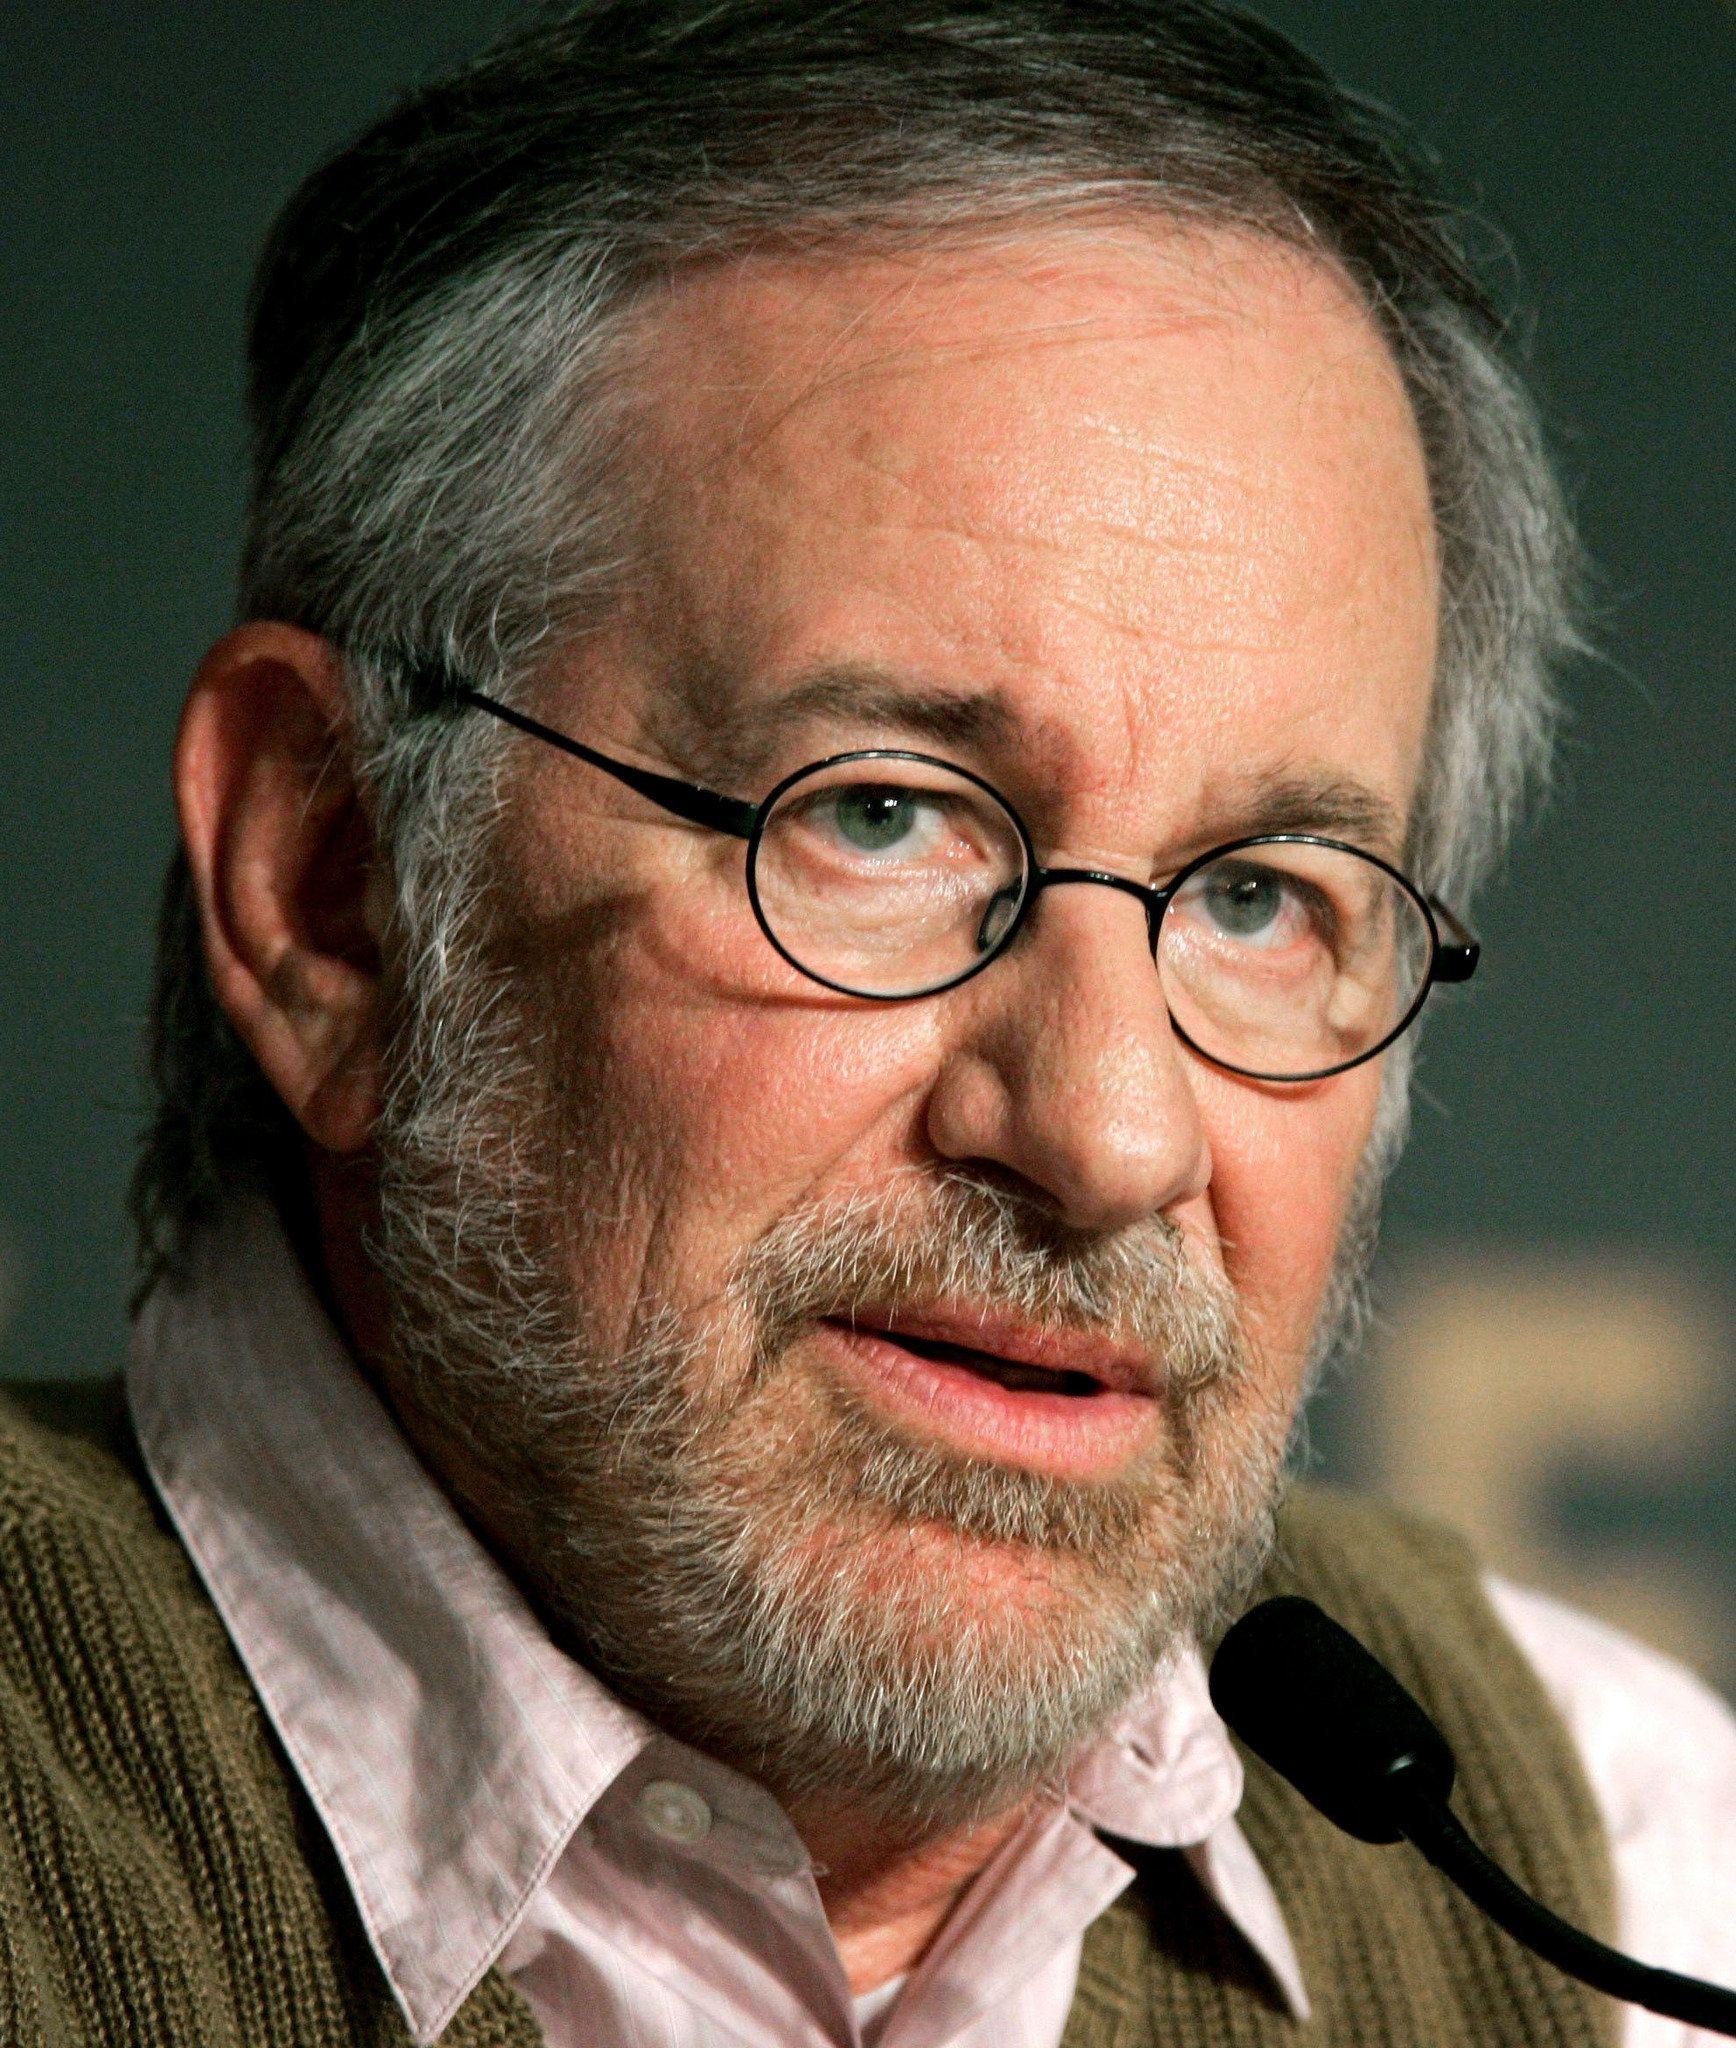 Steven Spielberg Wallpaper. Celebrities Wallpaper Gallery